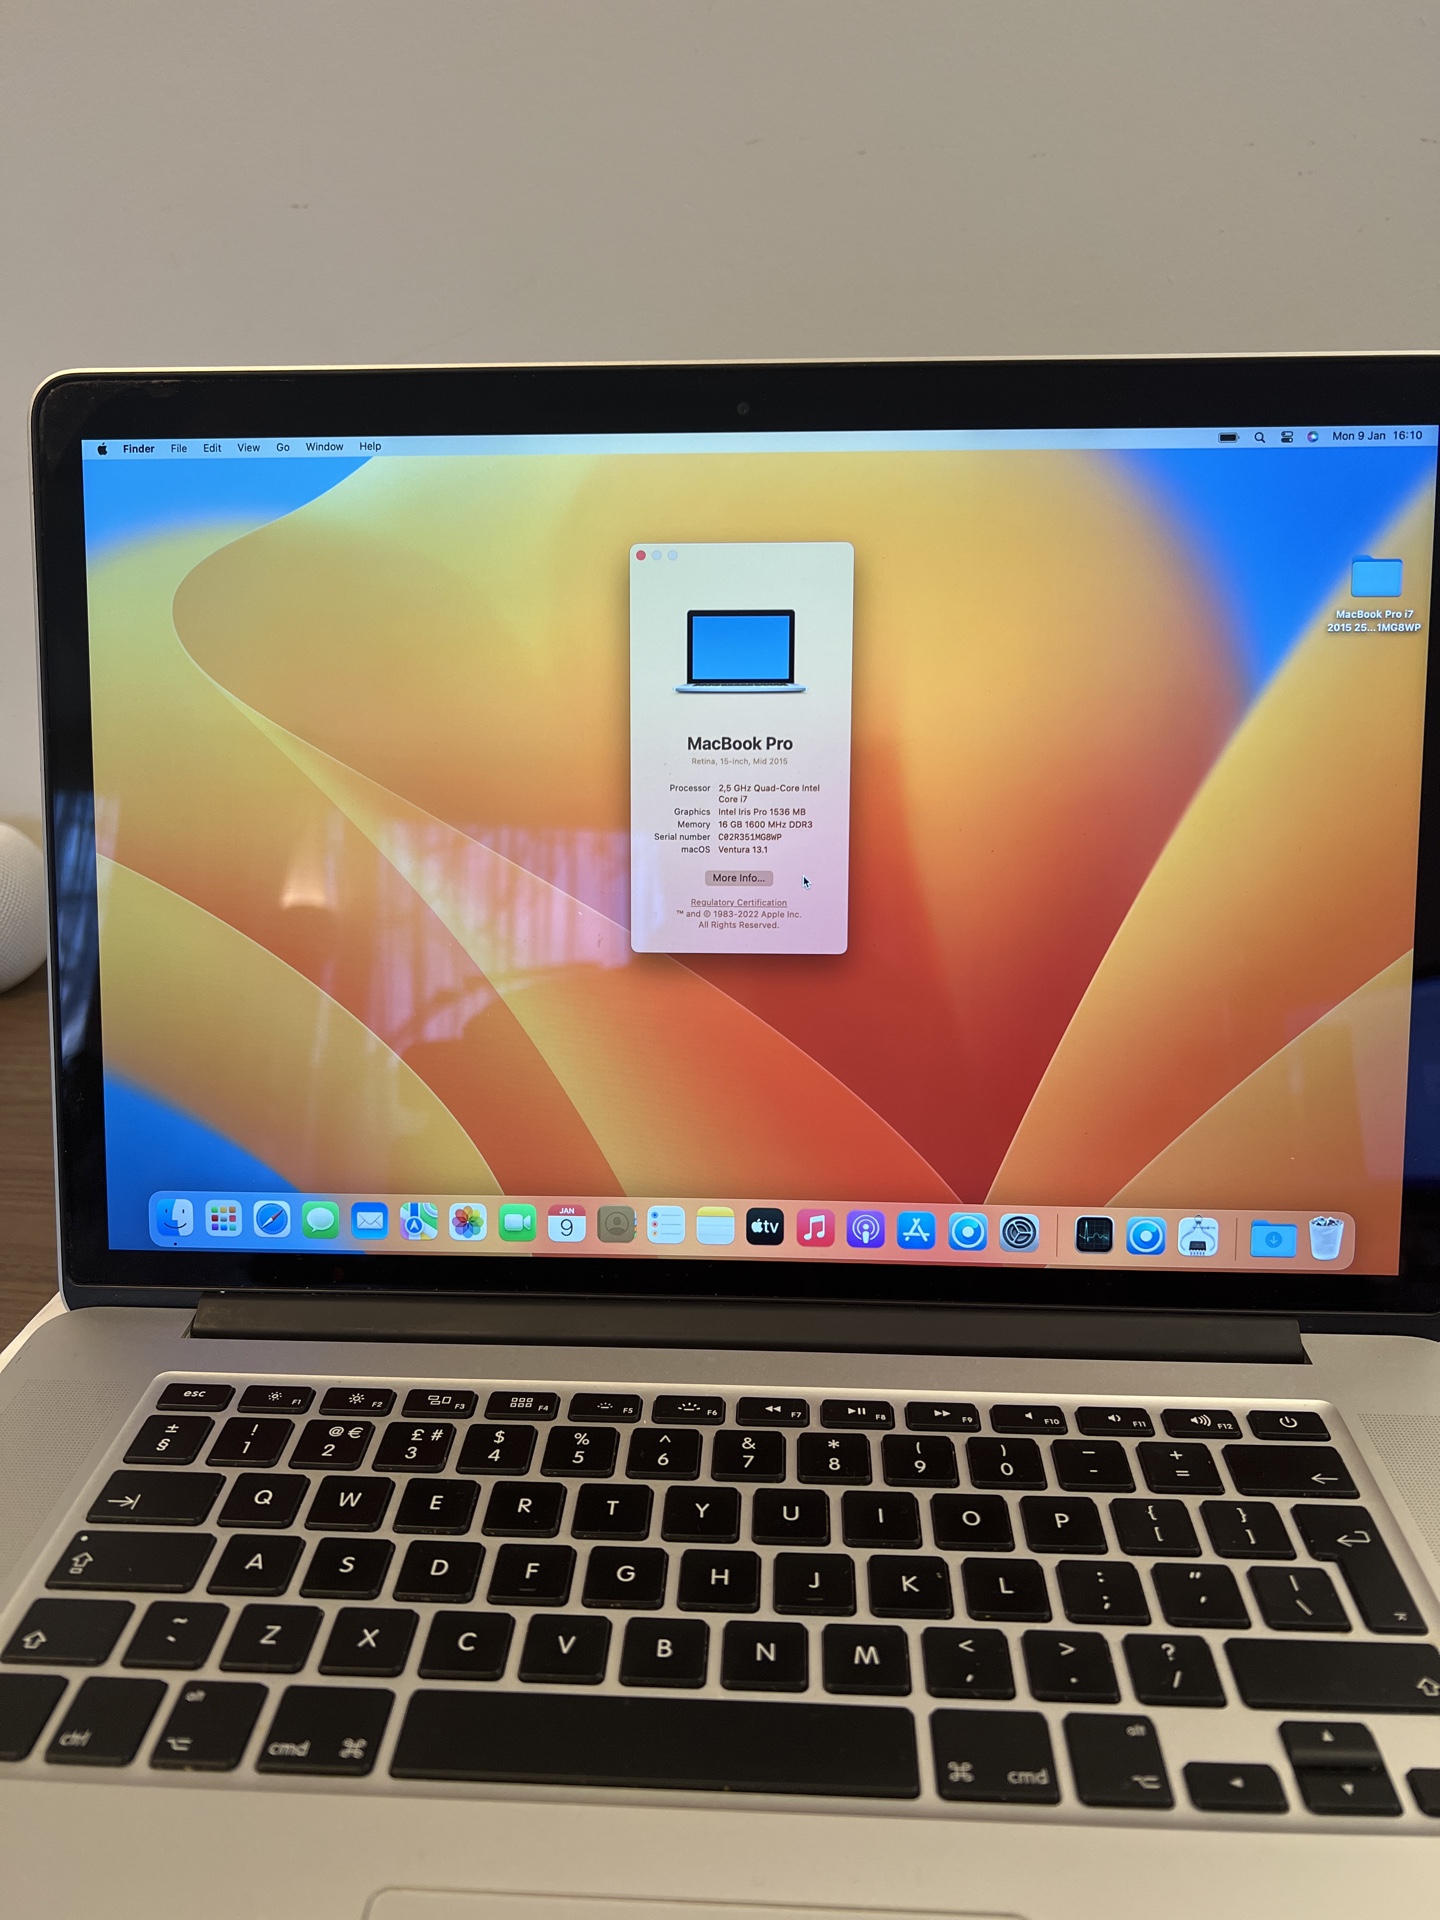 MacBook Pro 15′ RETINA i7 2,5GHz 16GB RAM AMD Radeon R9 2GB 256GB SSD –  – "Alles wat buiten fabrieksgarantie valt"